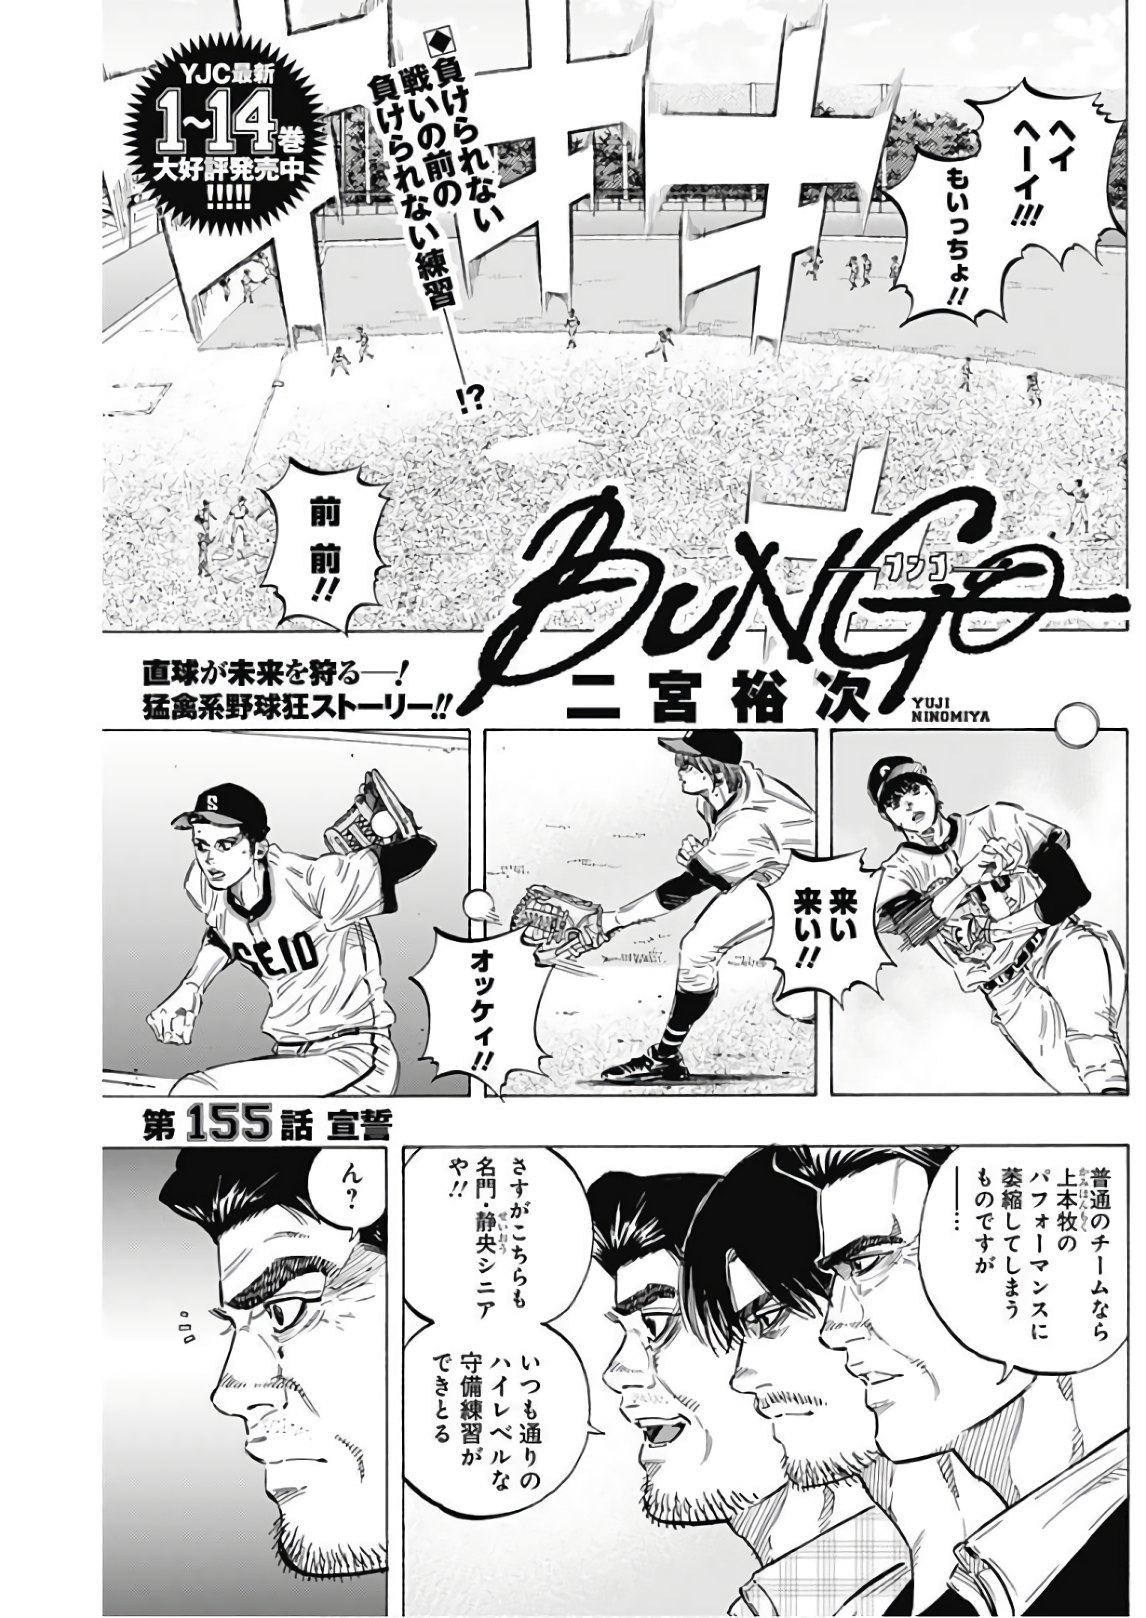 BUNGO-ブンゴ- 第155話 - Page 1